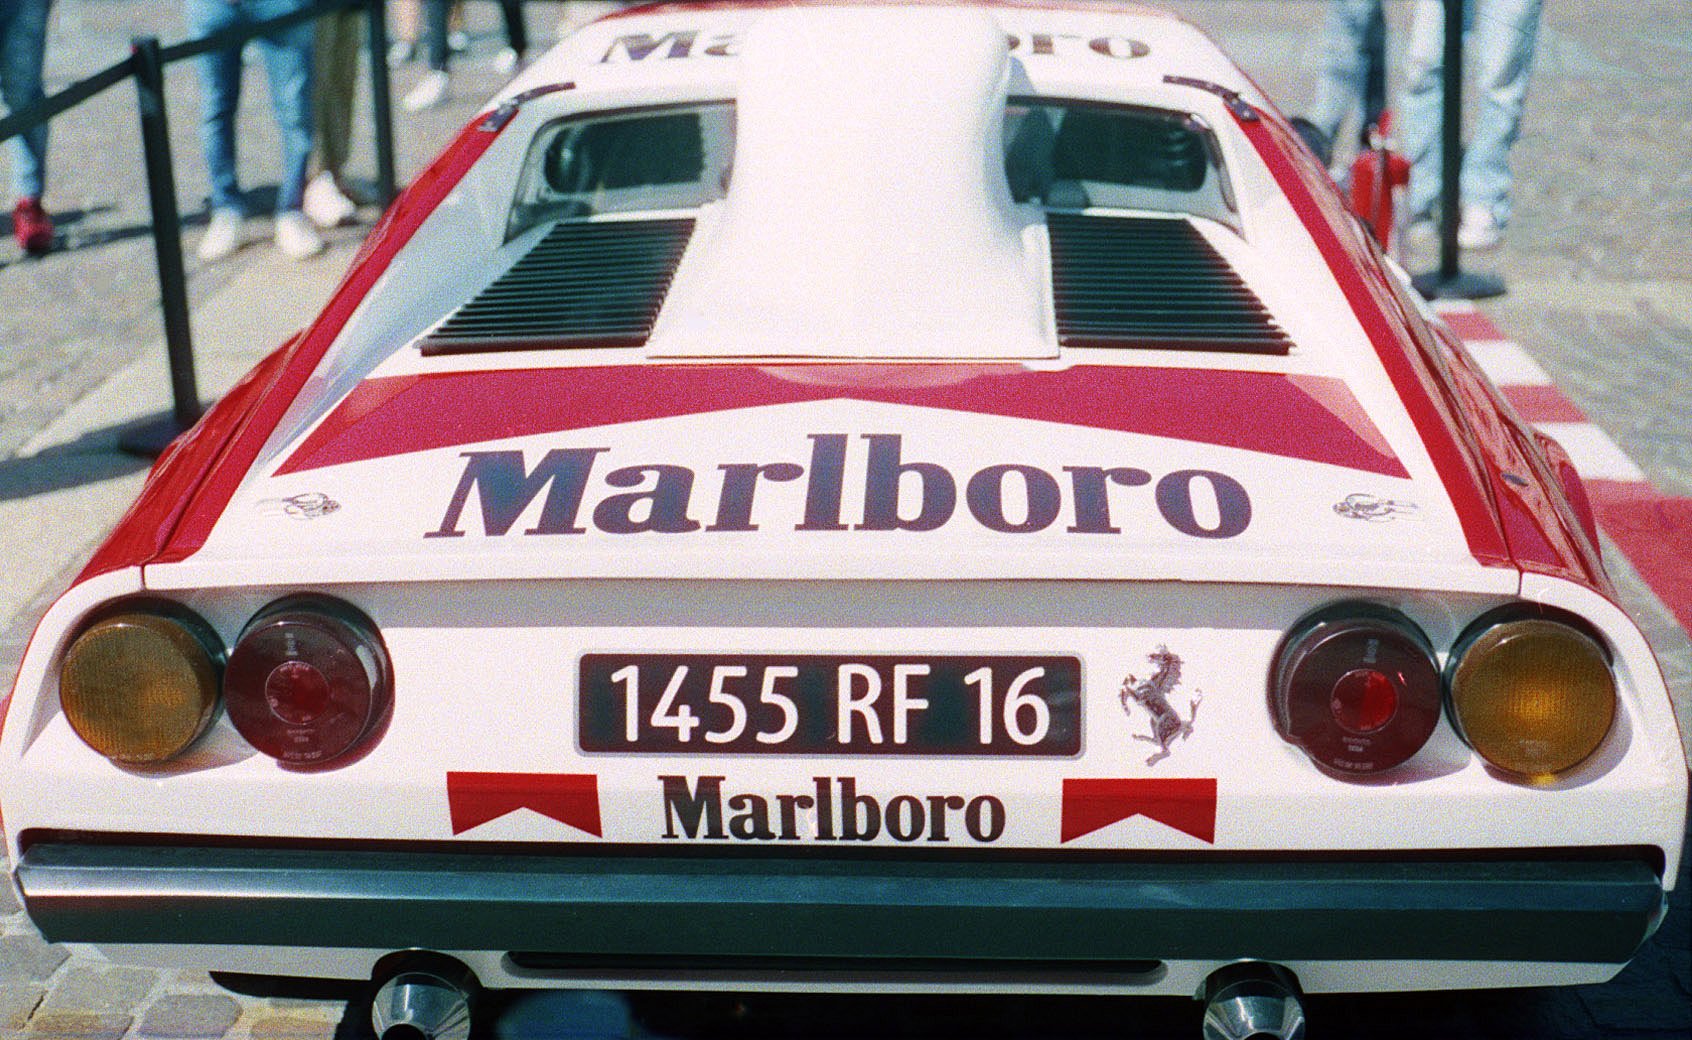  Ferrari Marlboro in Torino - Italy 